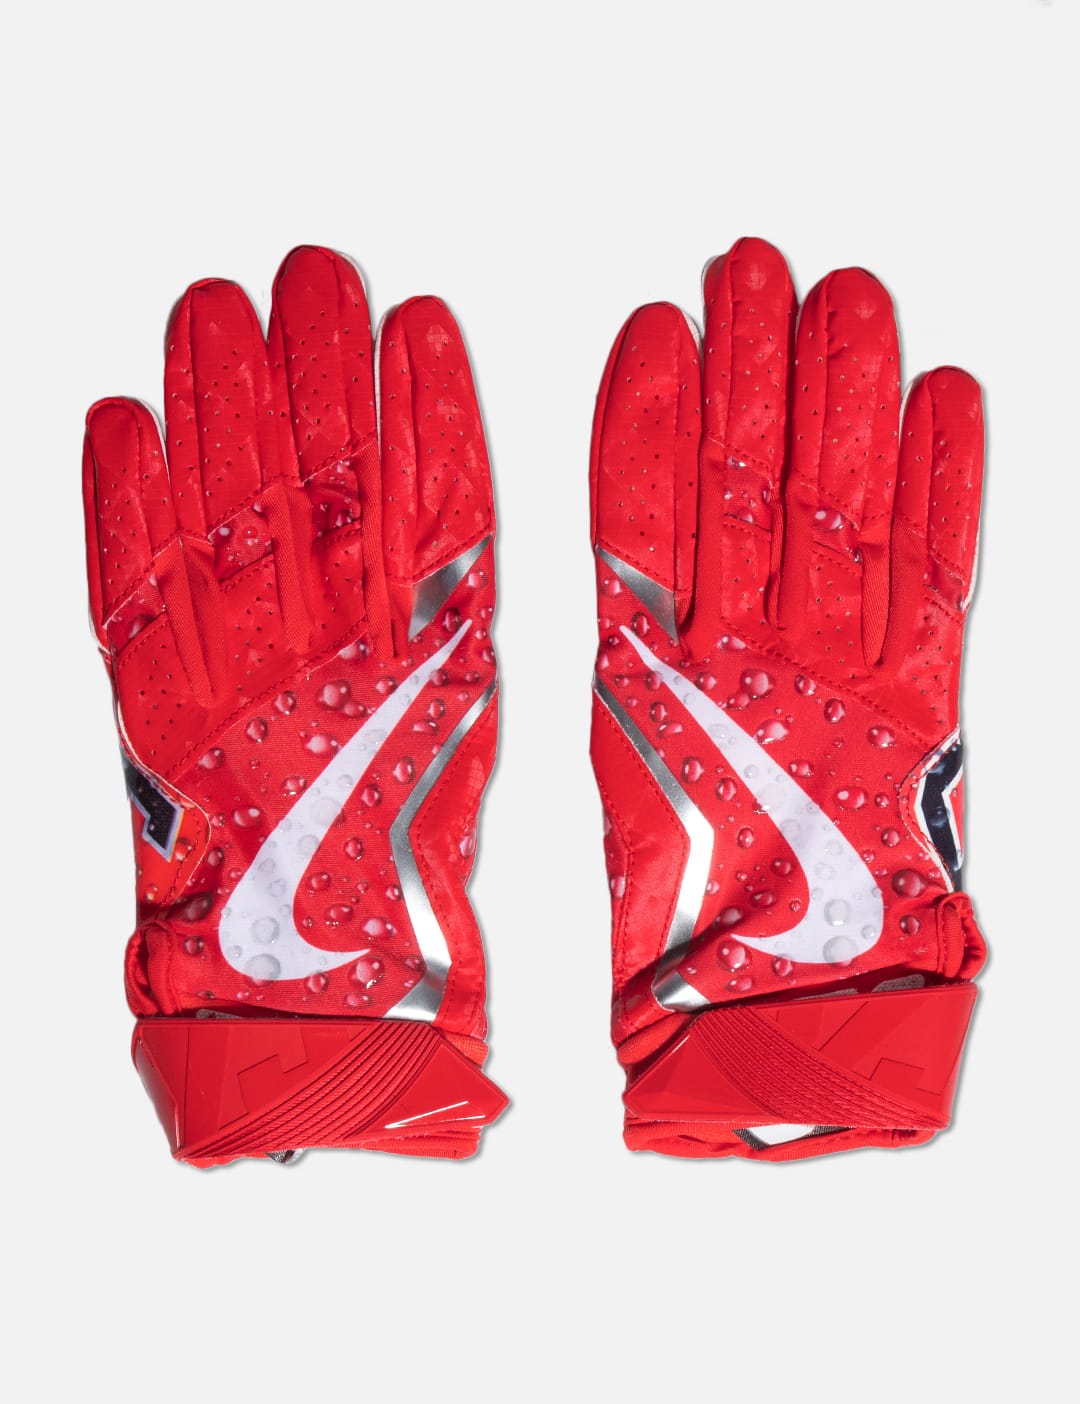 Supreme - Supreme x Nike Vapor Jet 4.0 Football Gloves | HBX ...